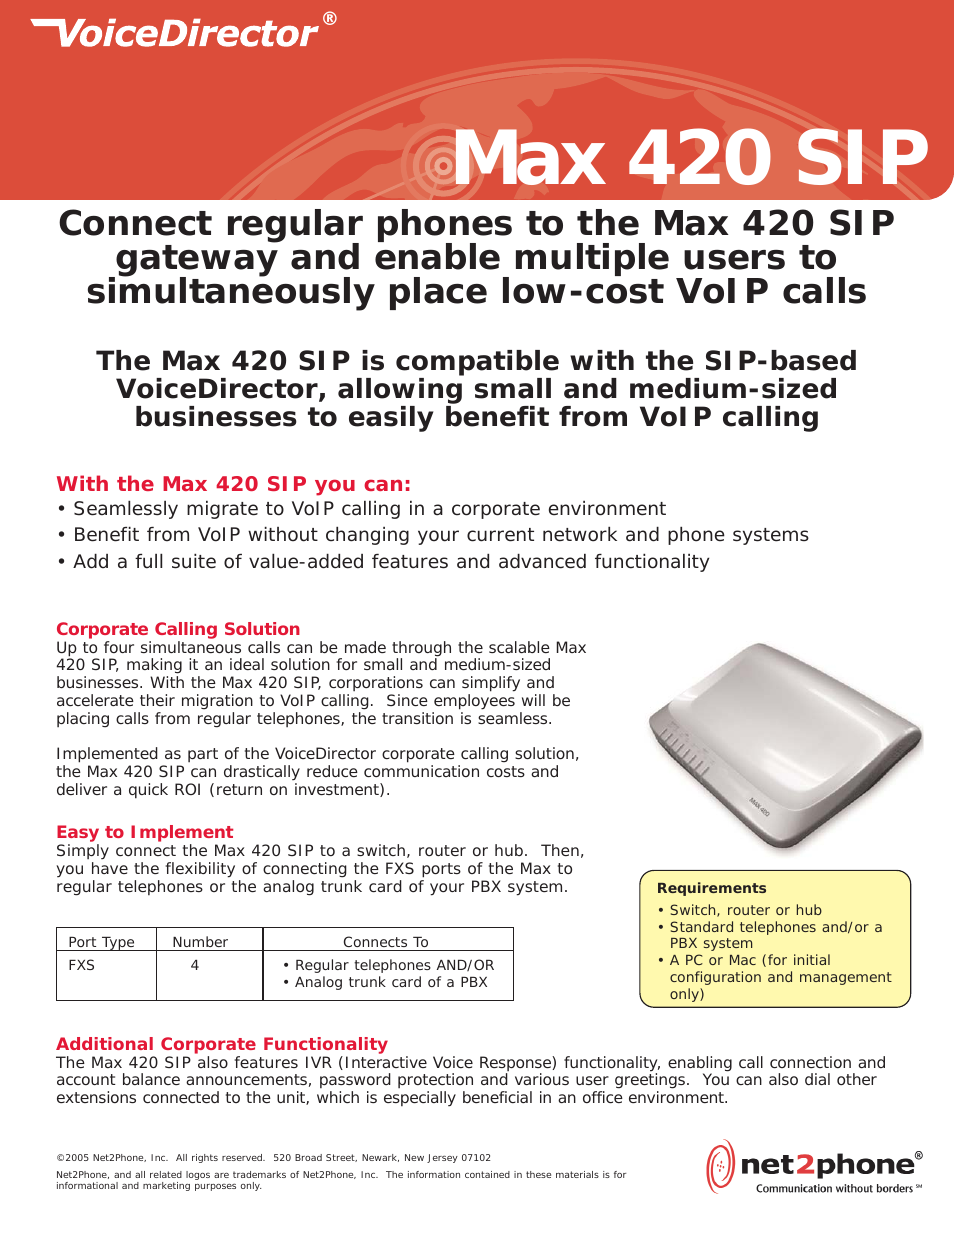 VoiceDirector Max 420 SIP